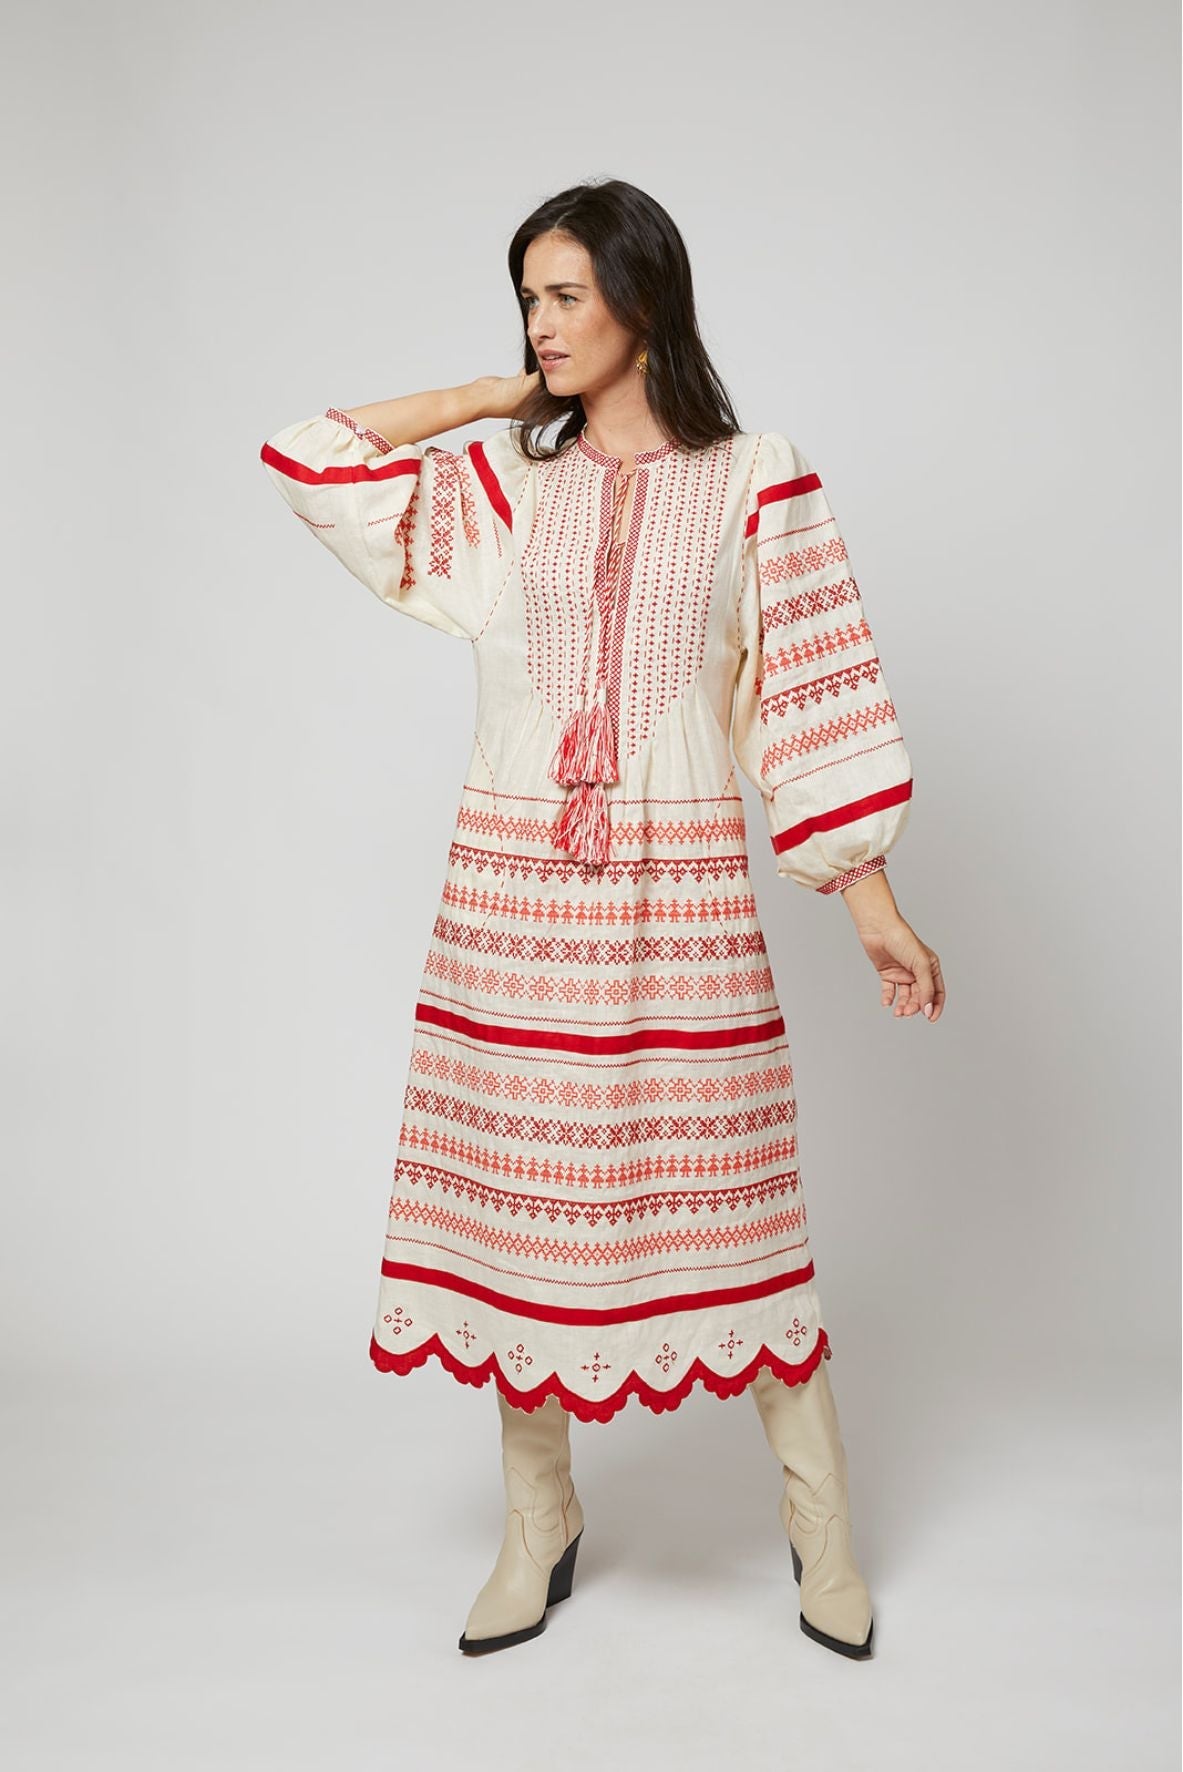 Kateryna Embroidered Ukrainian Dress - Ivory, Red by Larkin Lane